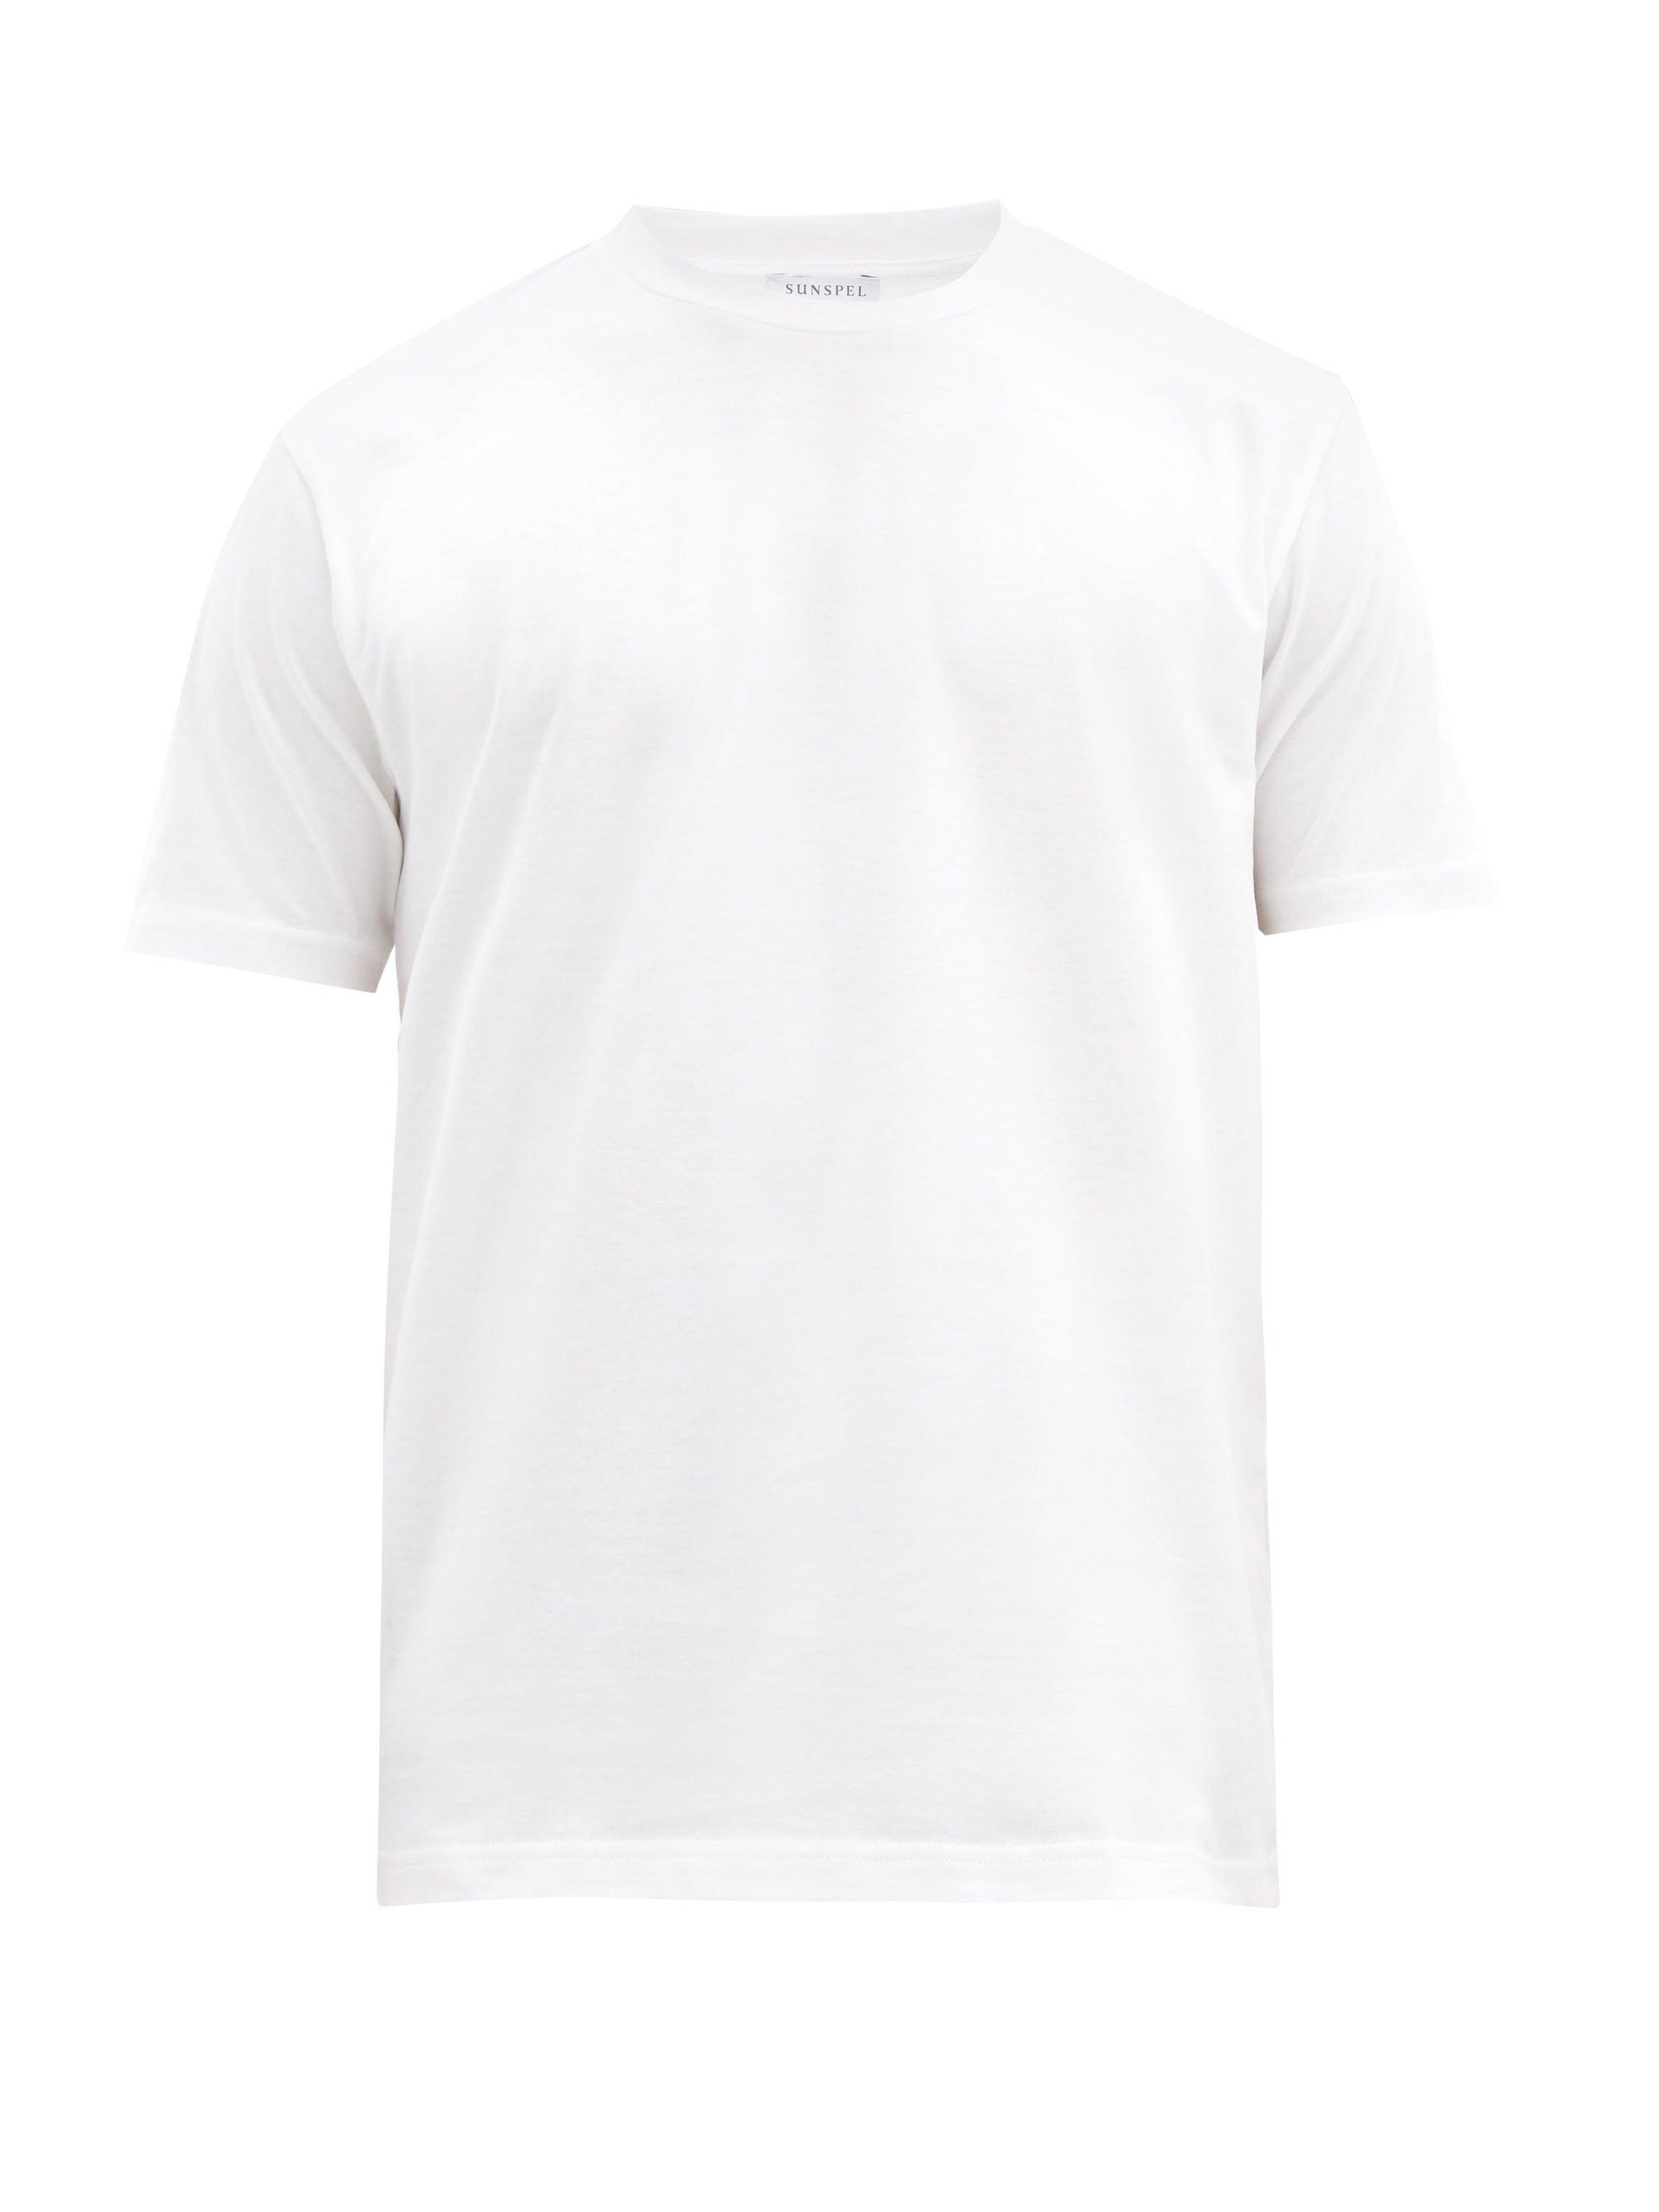 Sunspel Riviera Cotton-jersey T-shirt in White for Men - Lyst